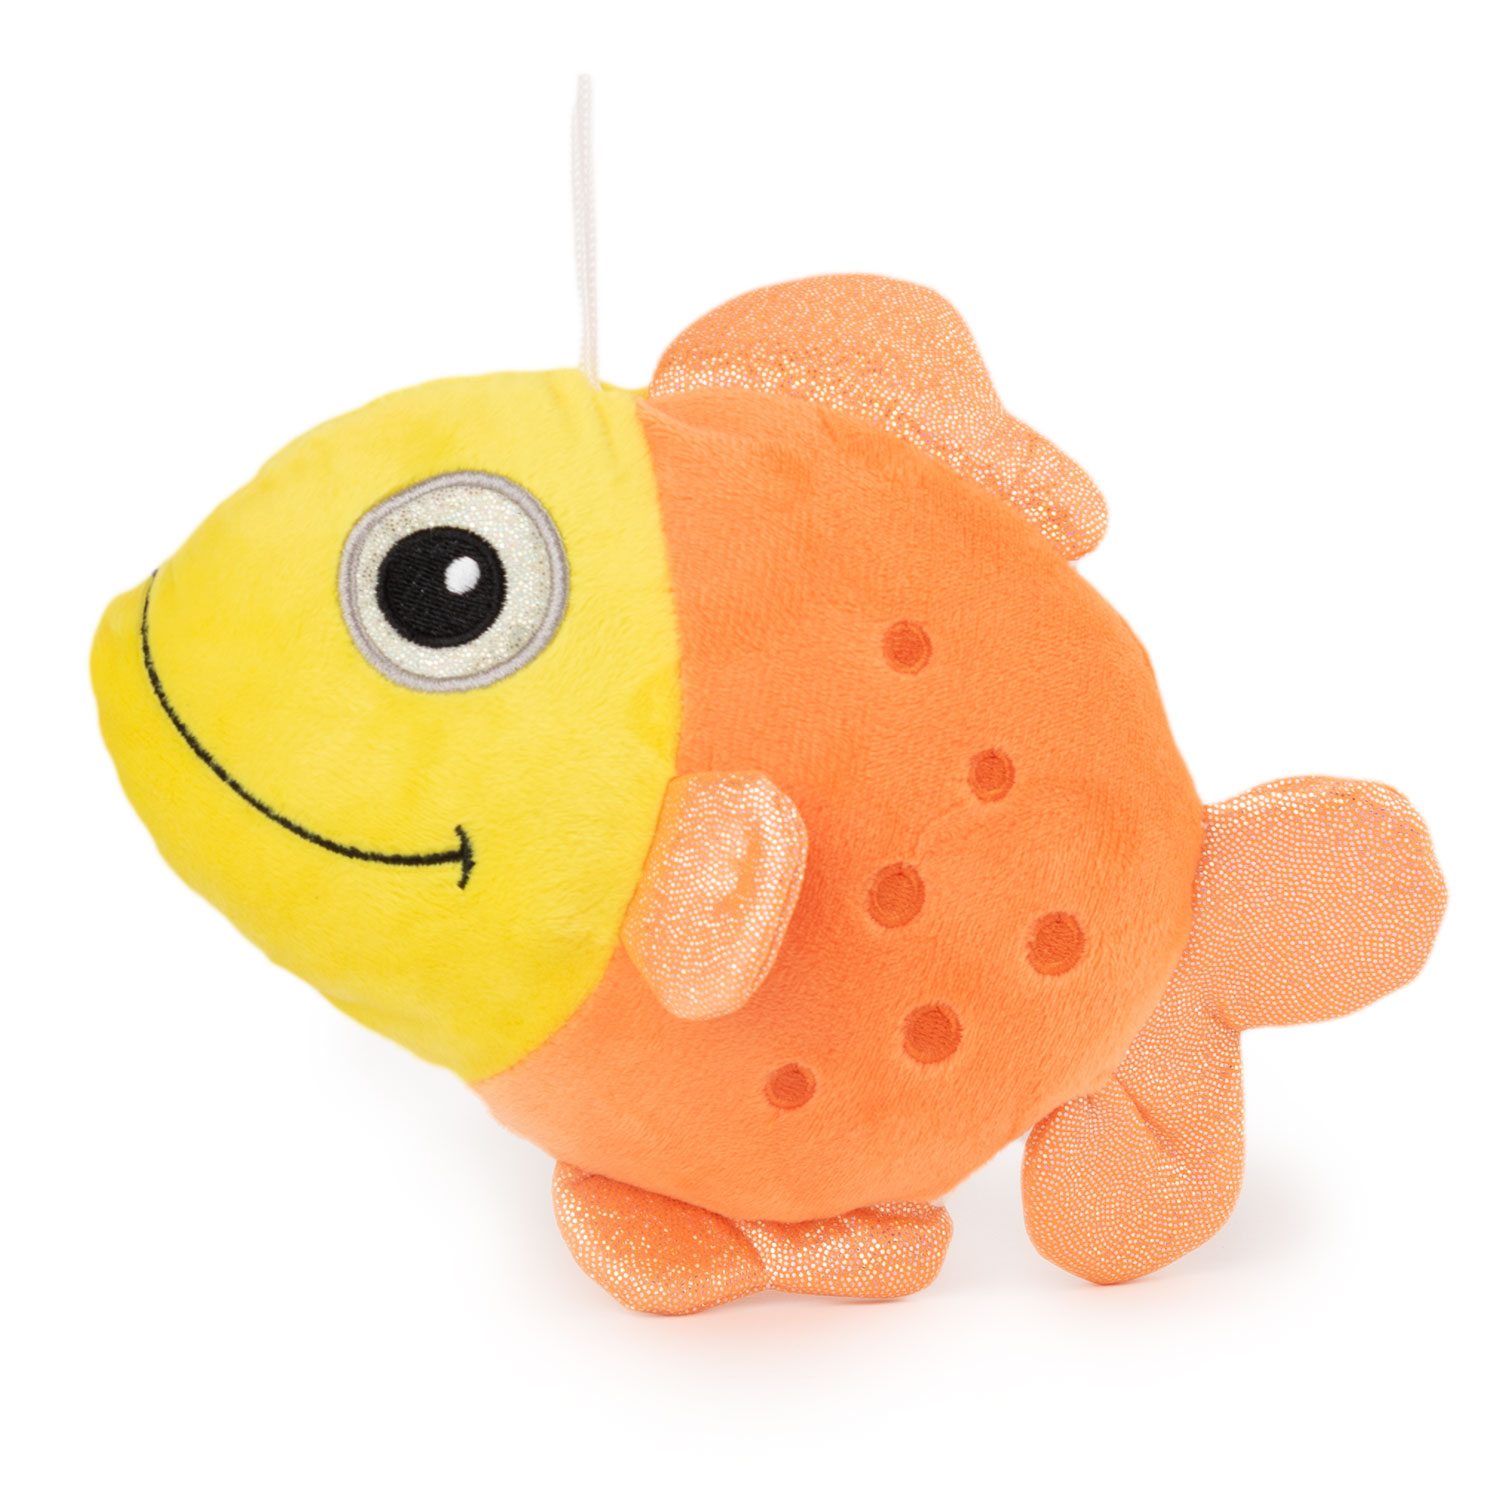 Colored fish - Orange